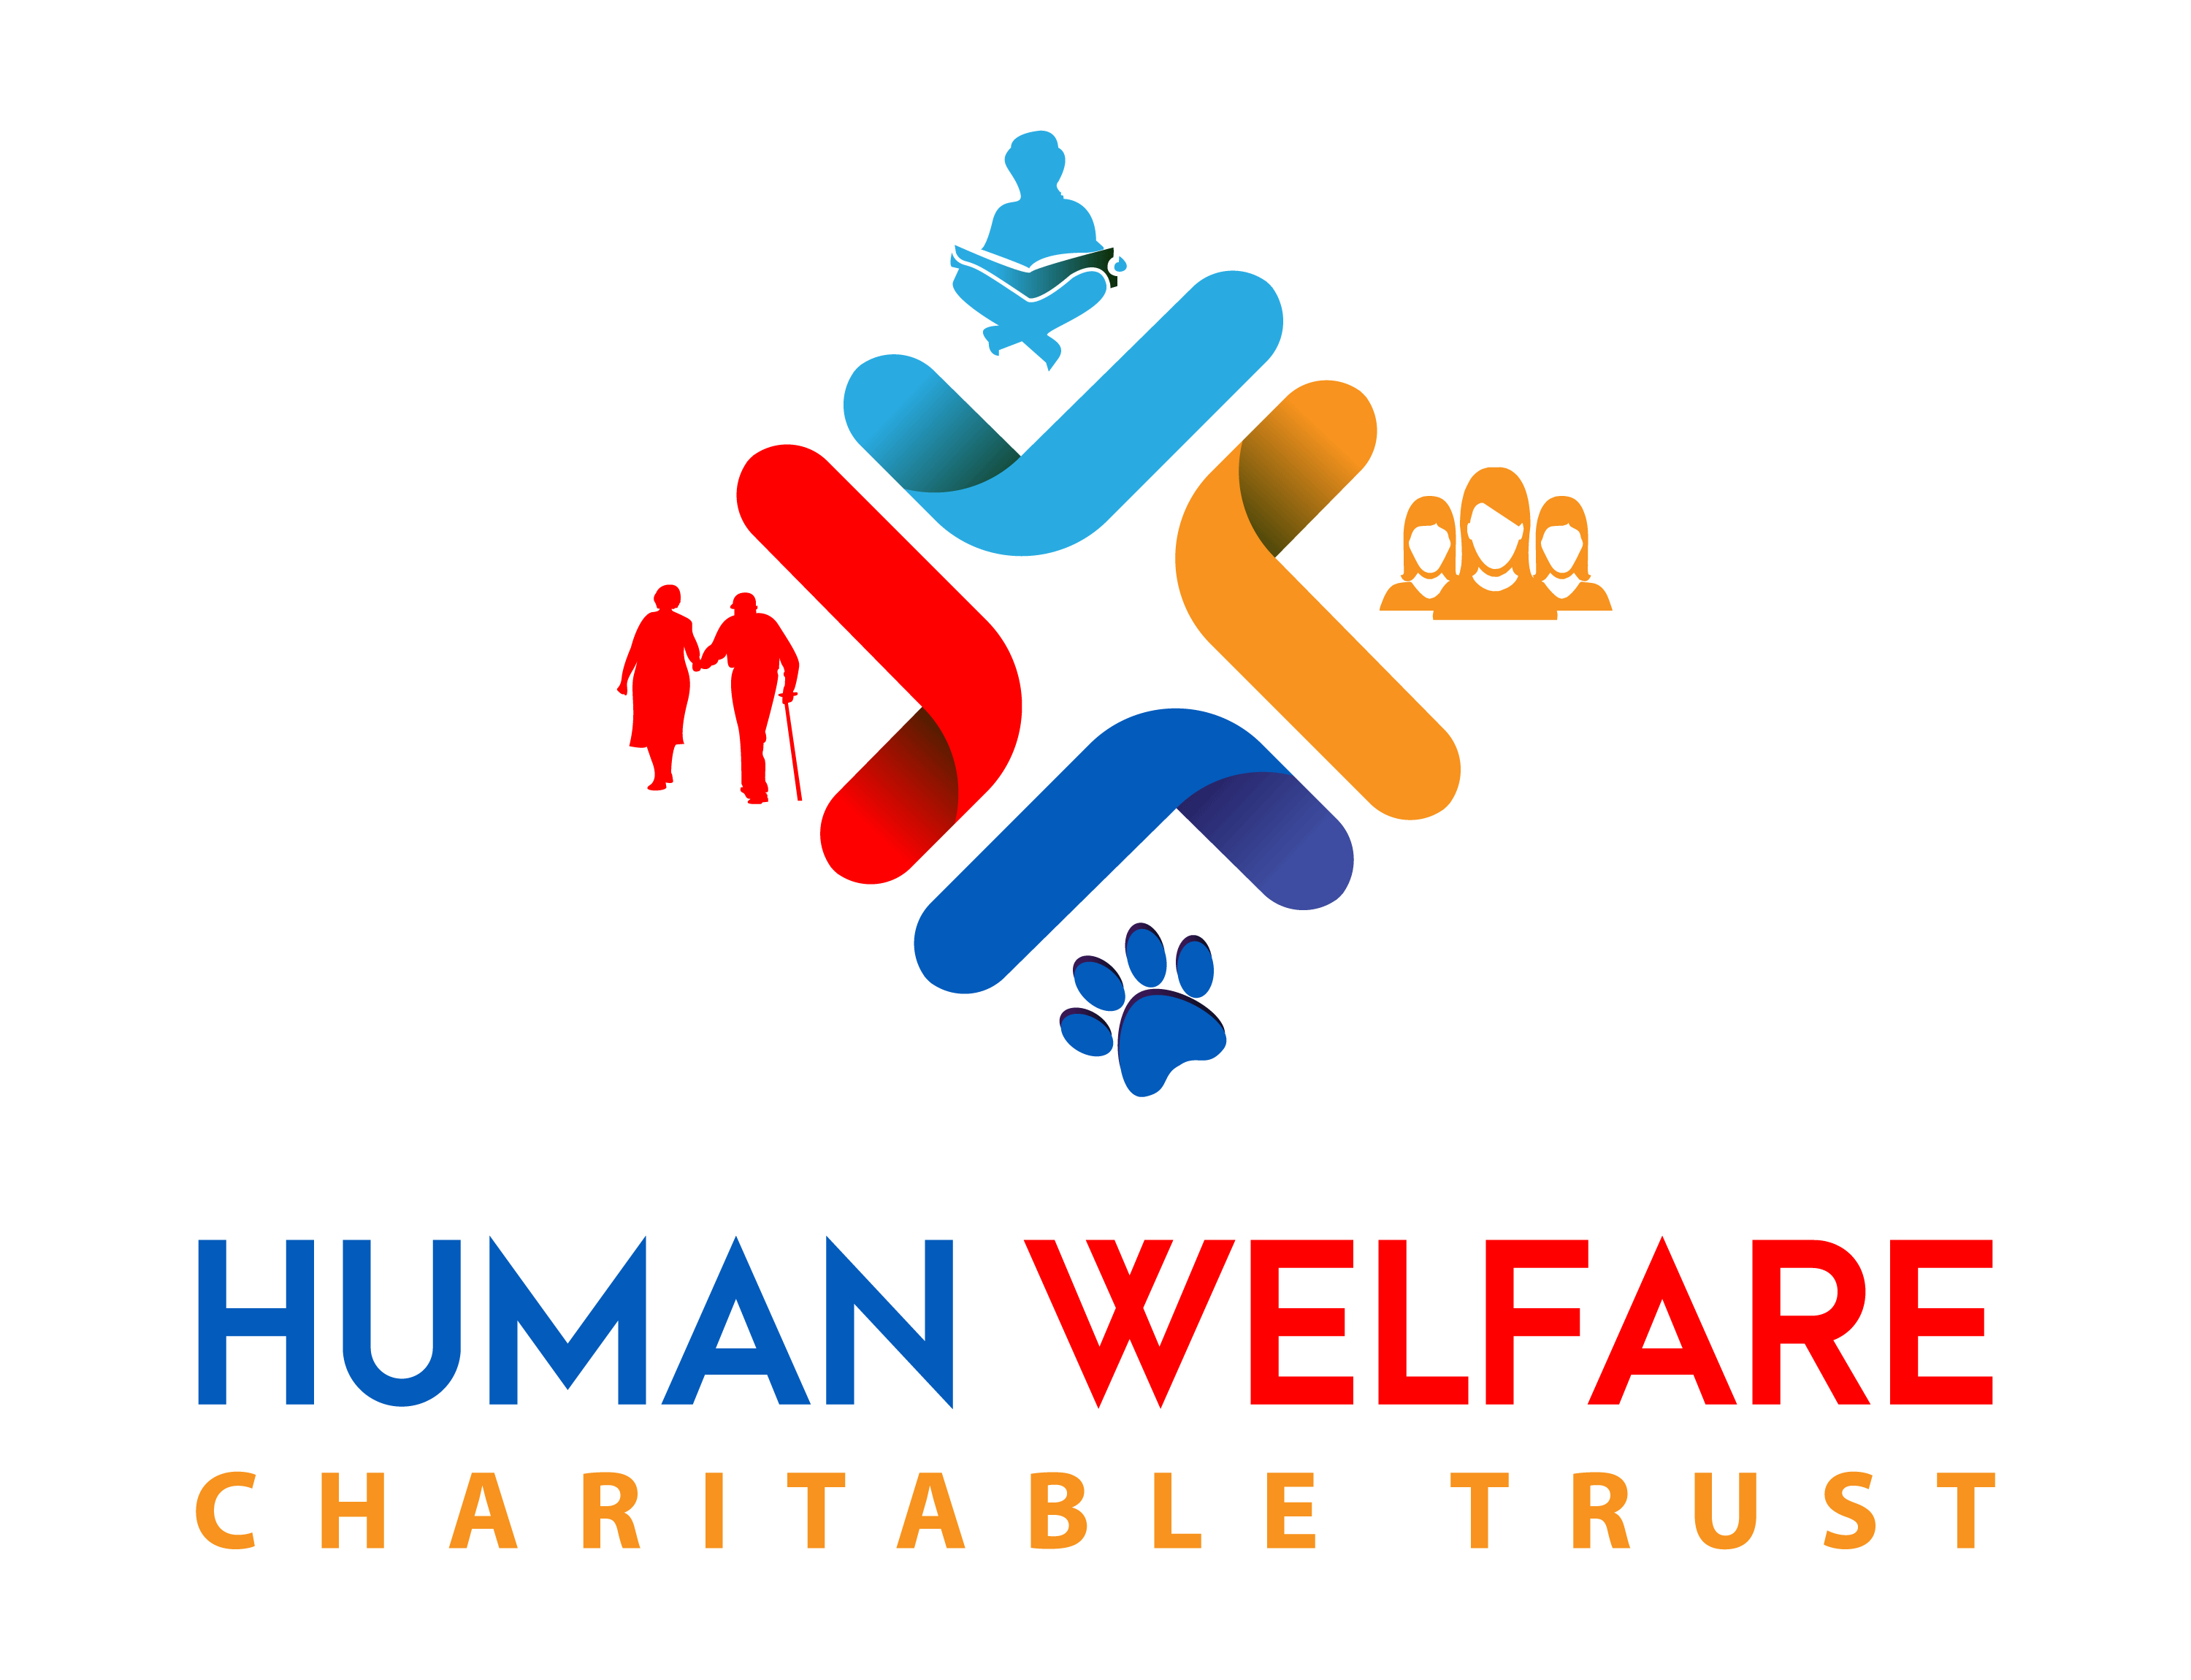 Human Welfare Charitable Trust logo